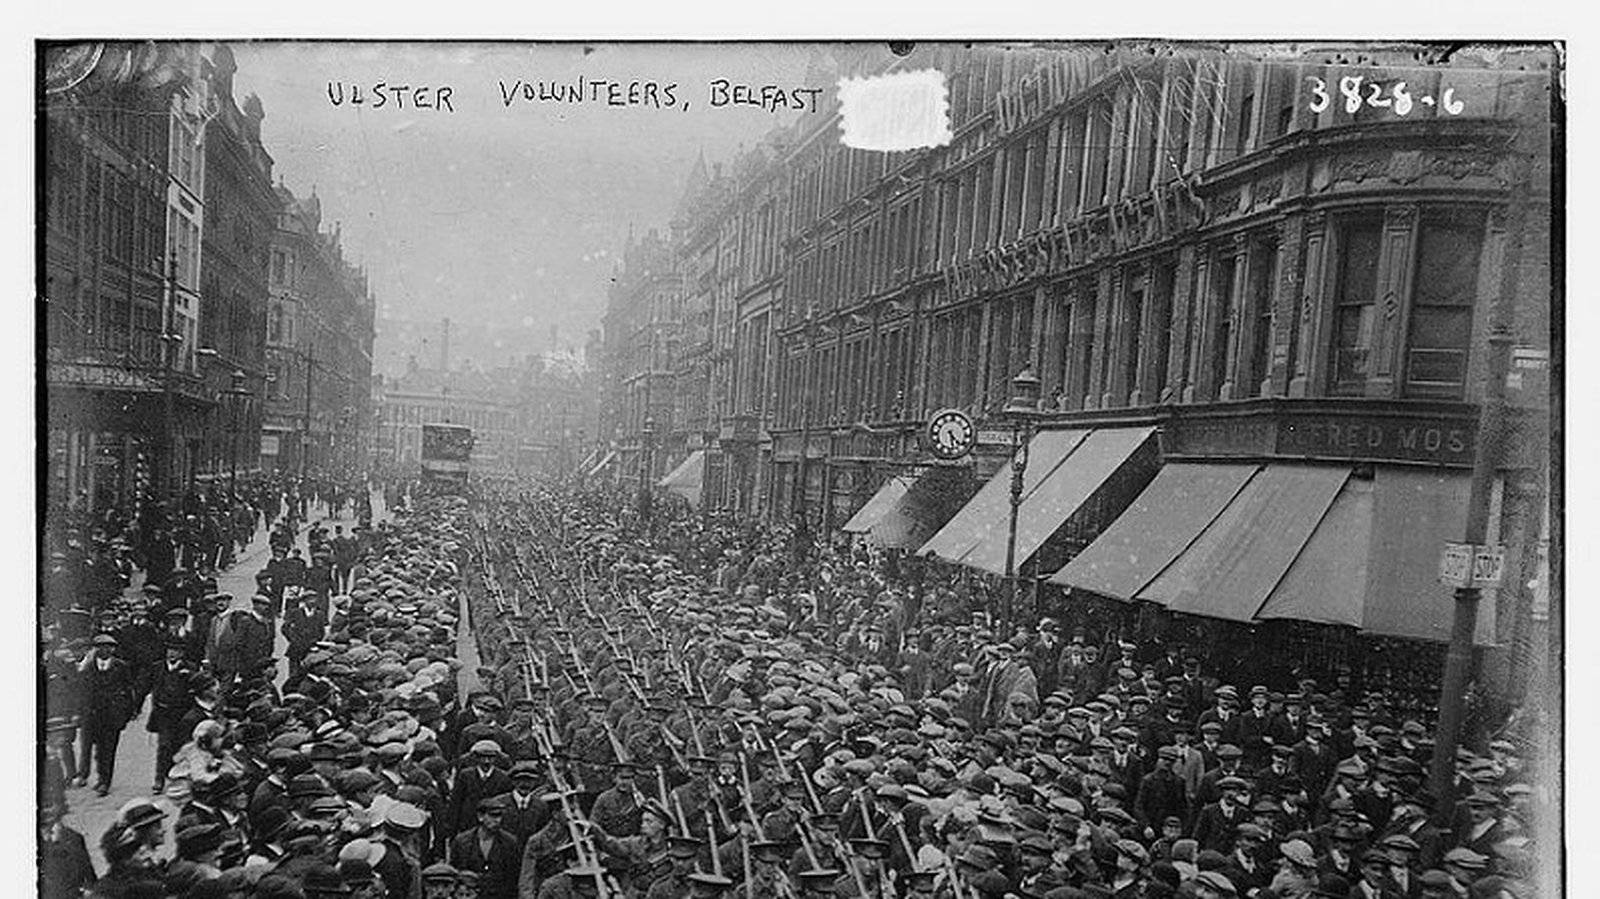 Image - A Belfast gathering of Ulster Volunteers